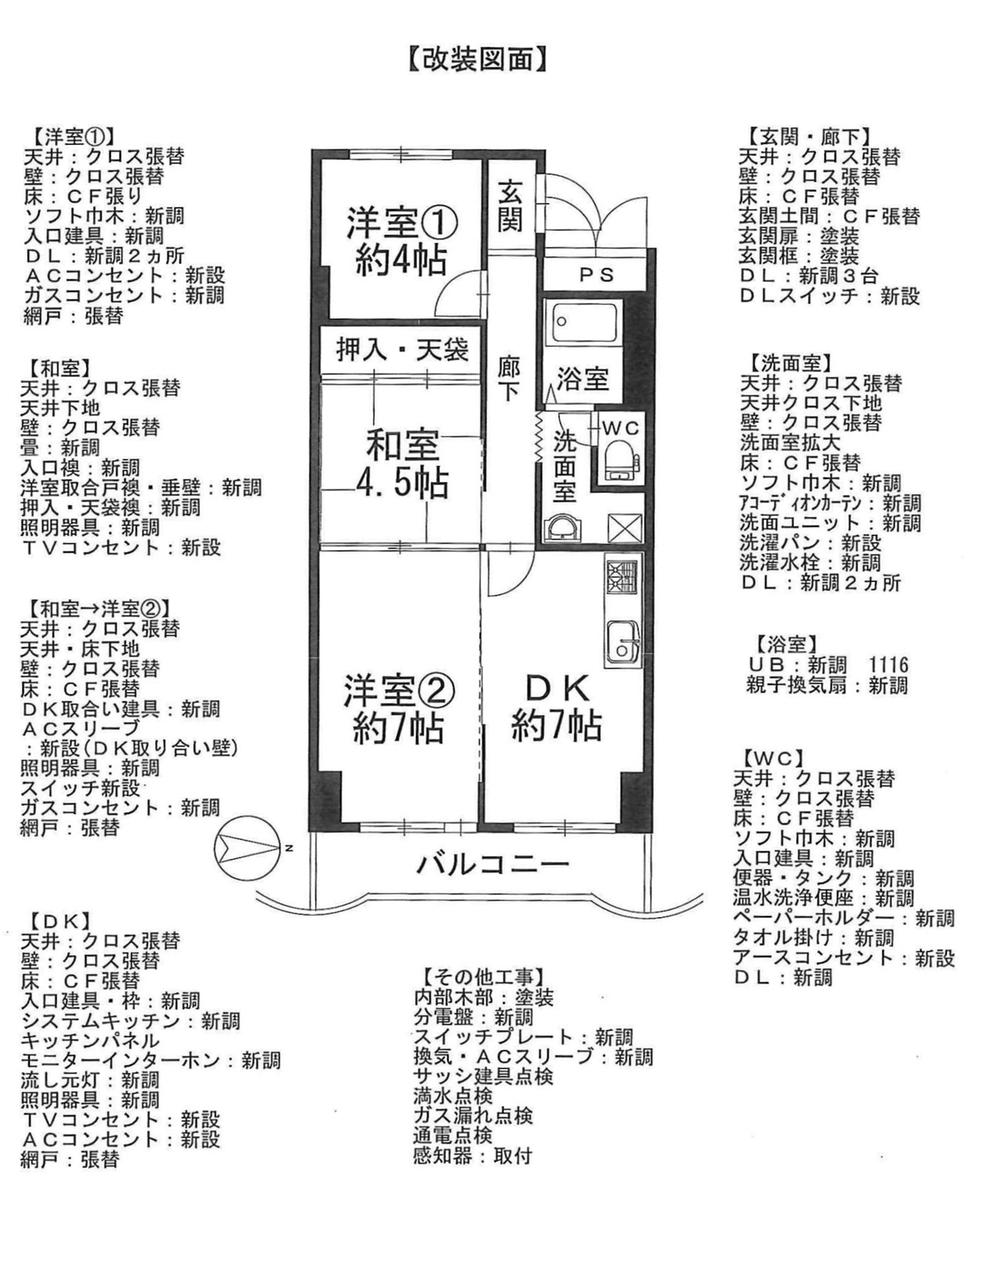 Floor plan. 3DK, Price 12.8 million yen, Occupied area 53.16 sq m , Balcony area 6.84 sq m